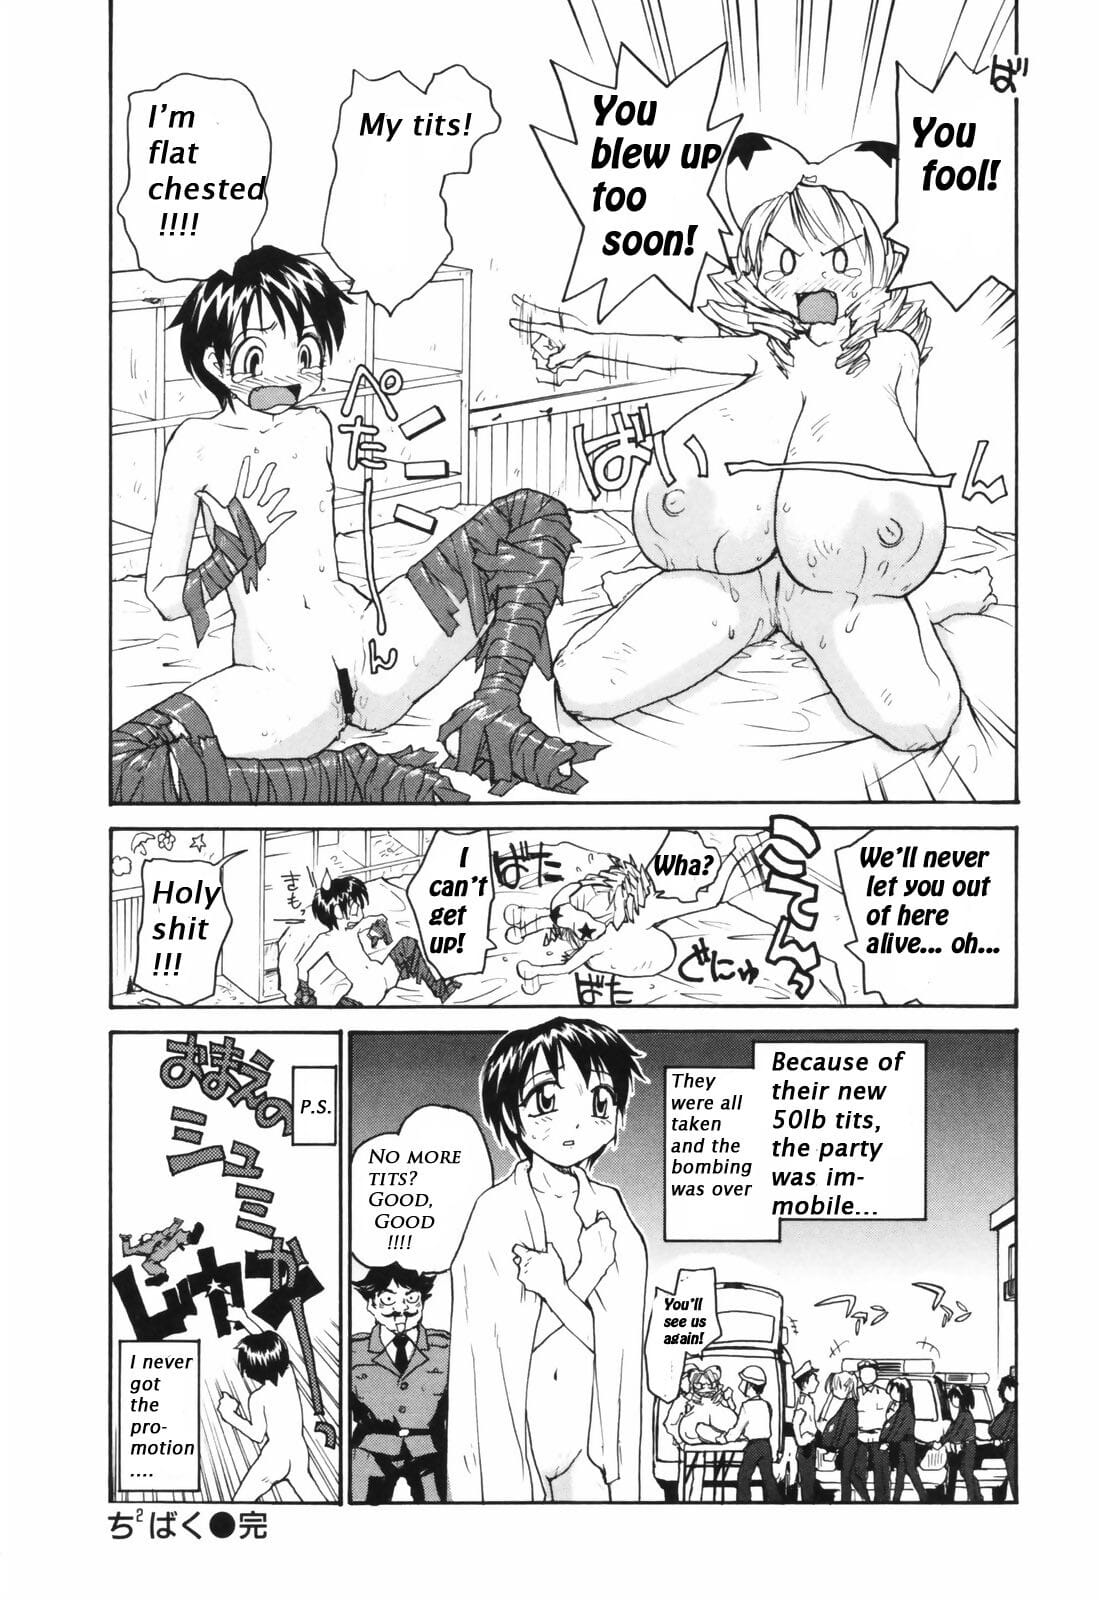 Chichi baku Chichi bomber boobicide bombshells page 1